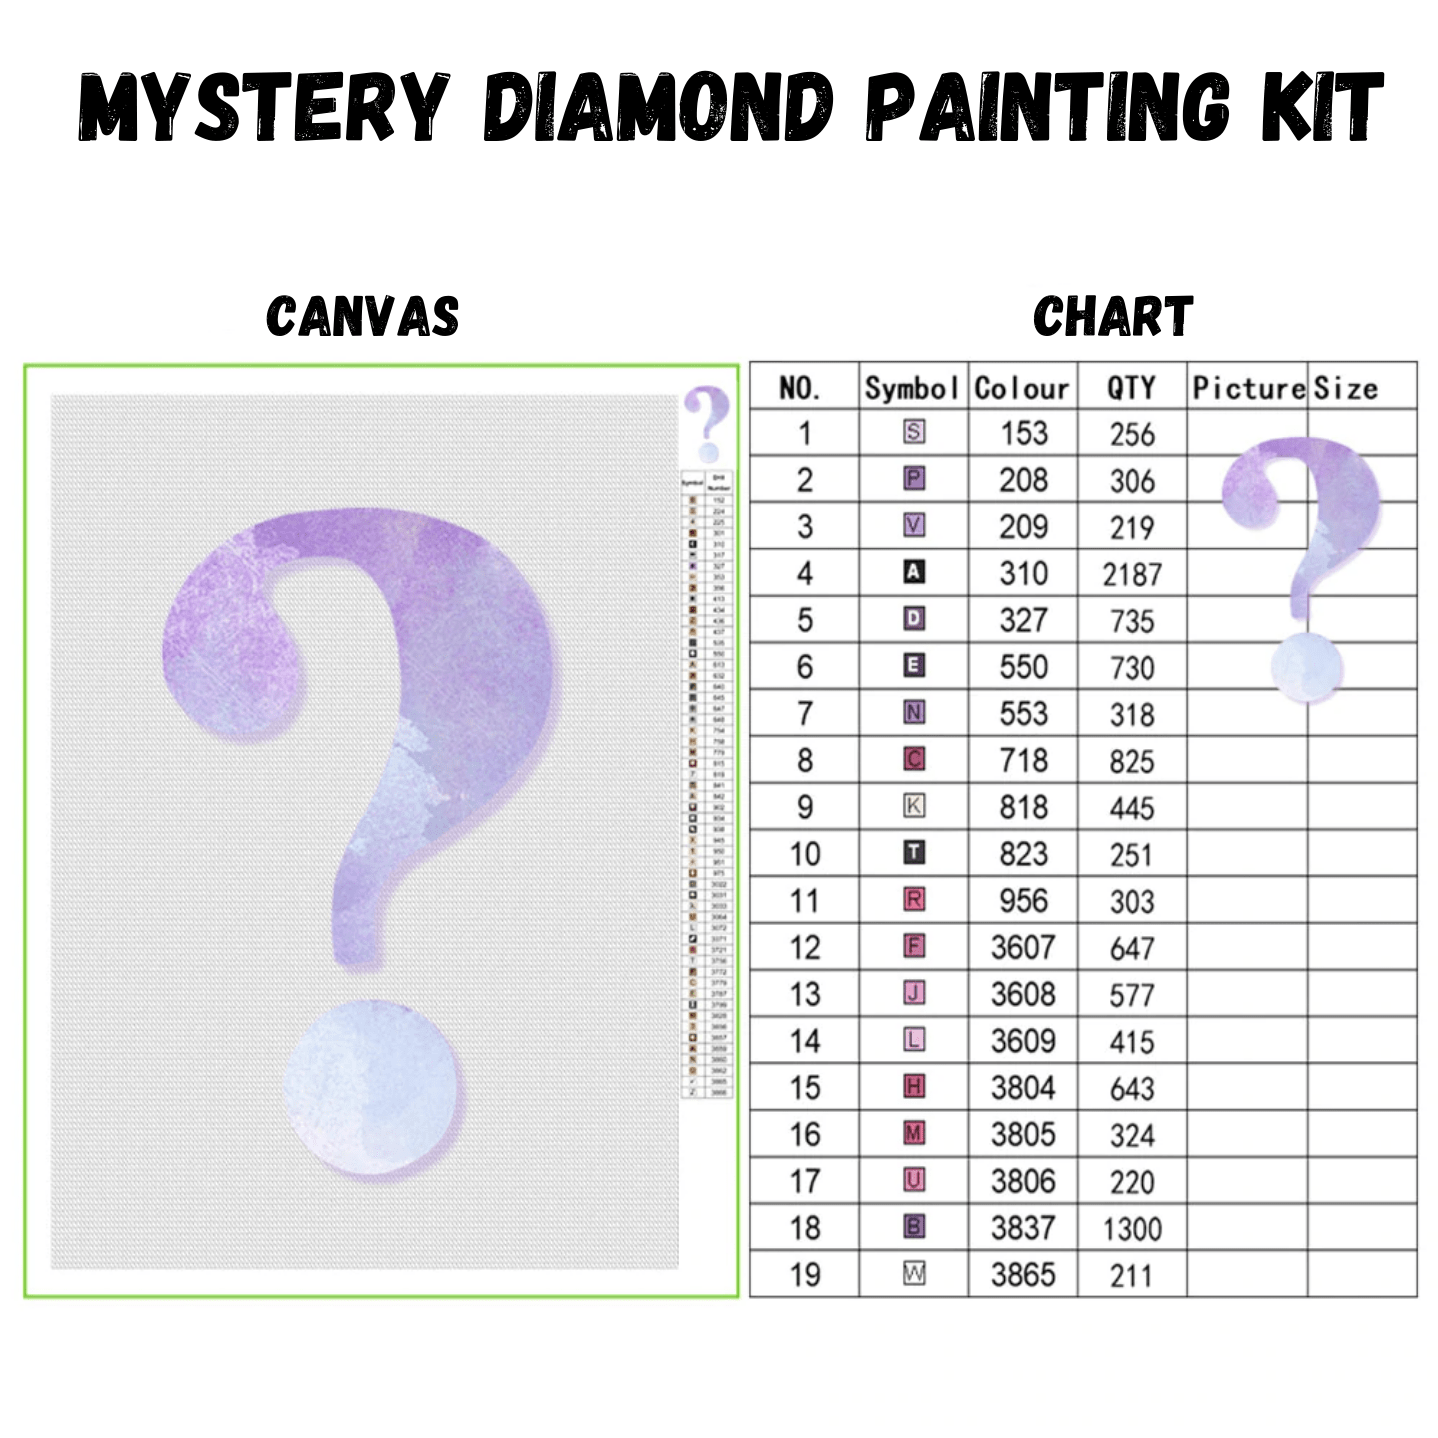 Mystery Diamond Painting KIT – Just Paint with Diamonds